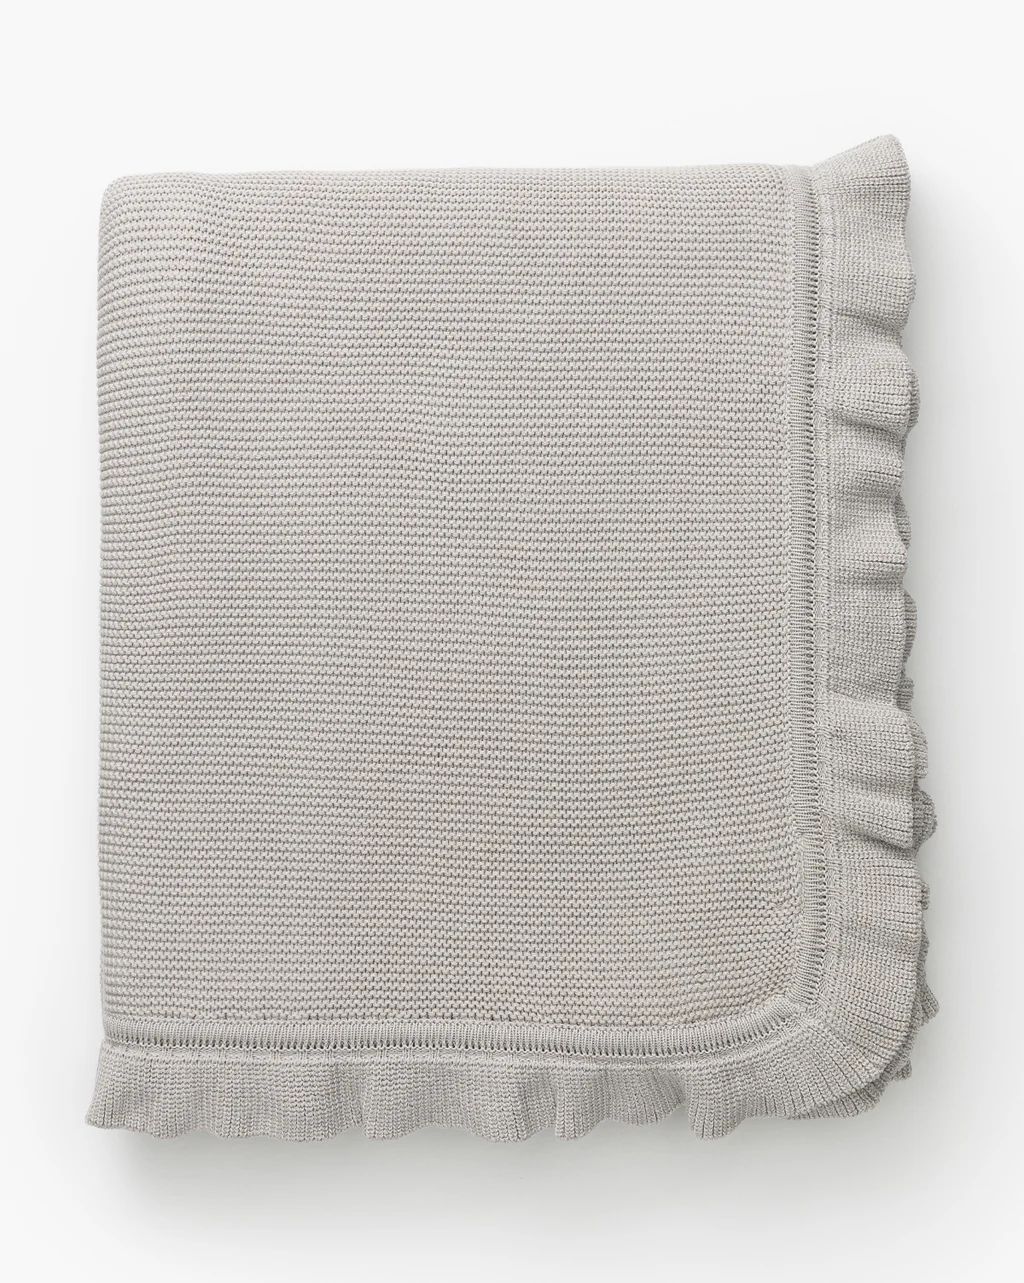 Mila Blanket | McGee & Co.